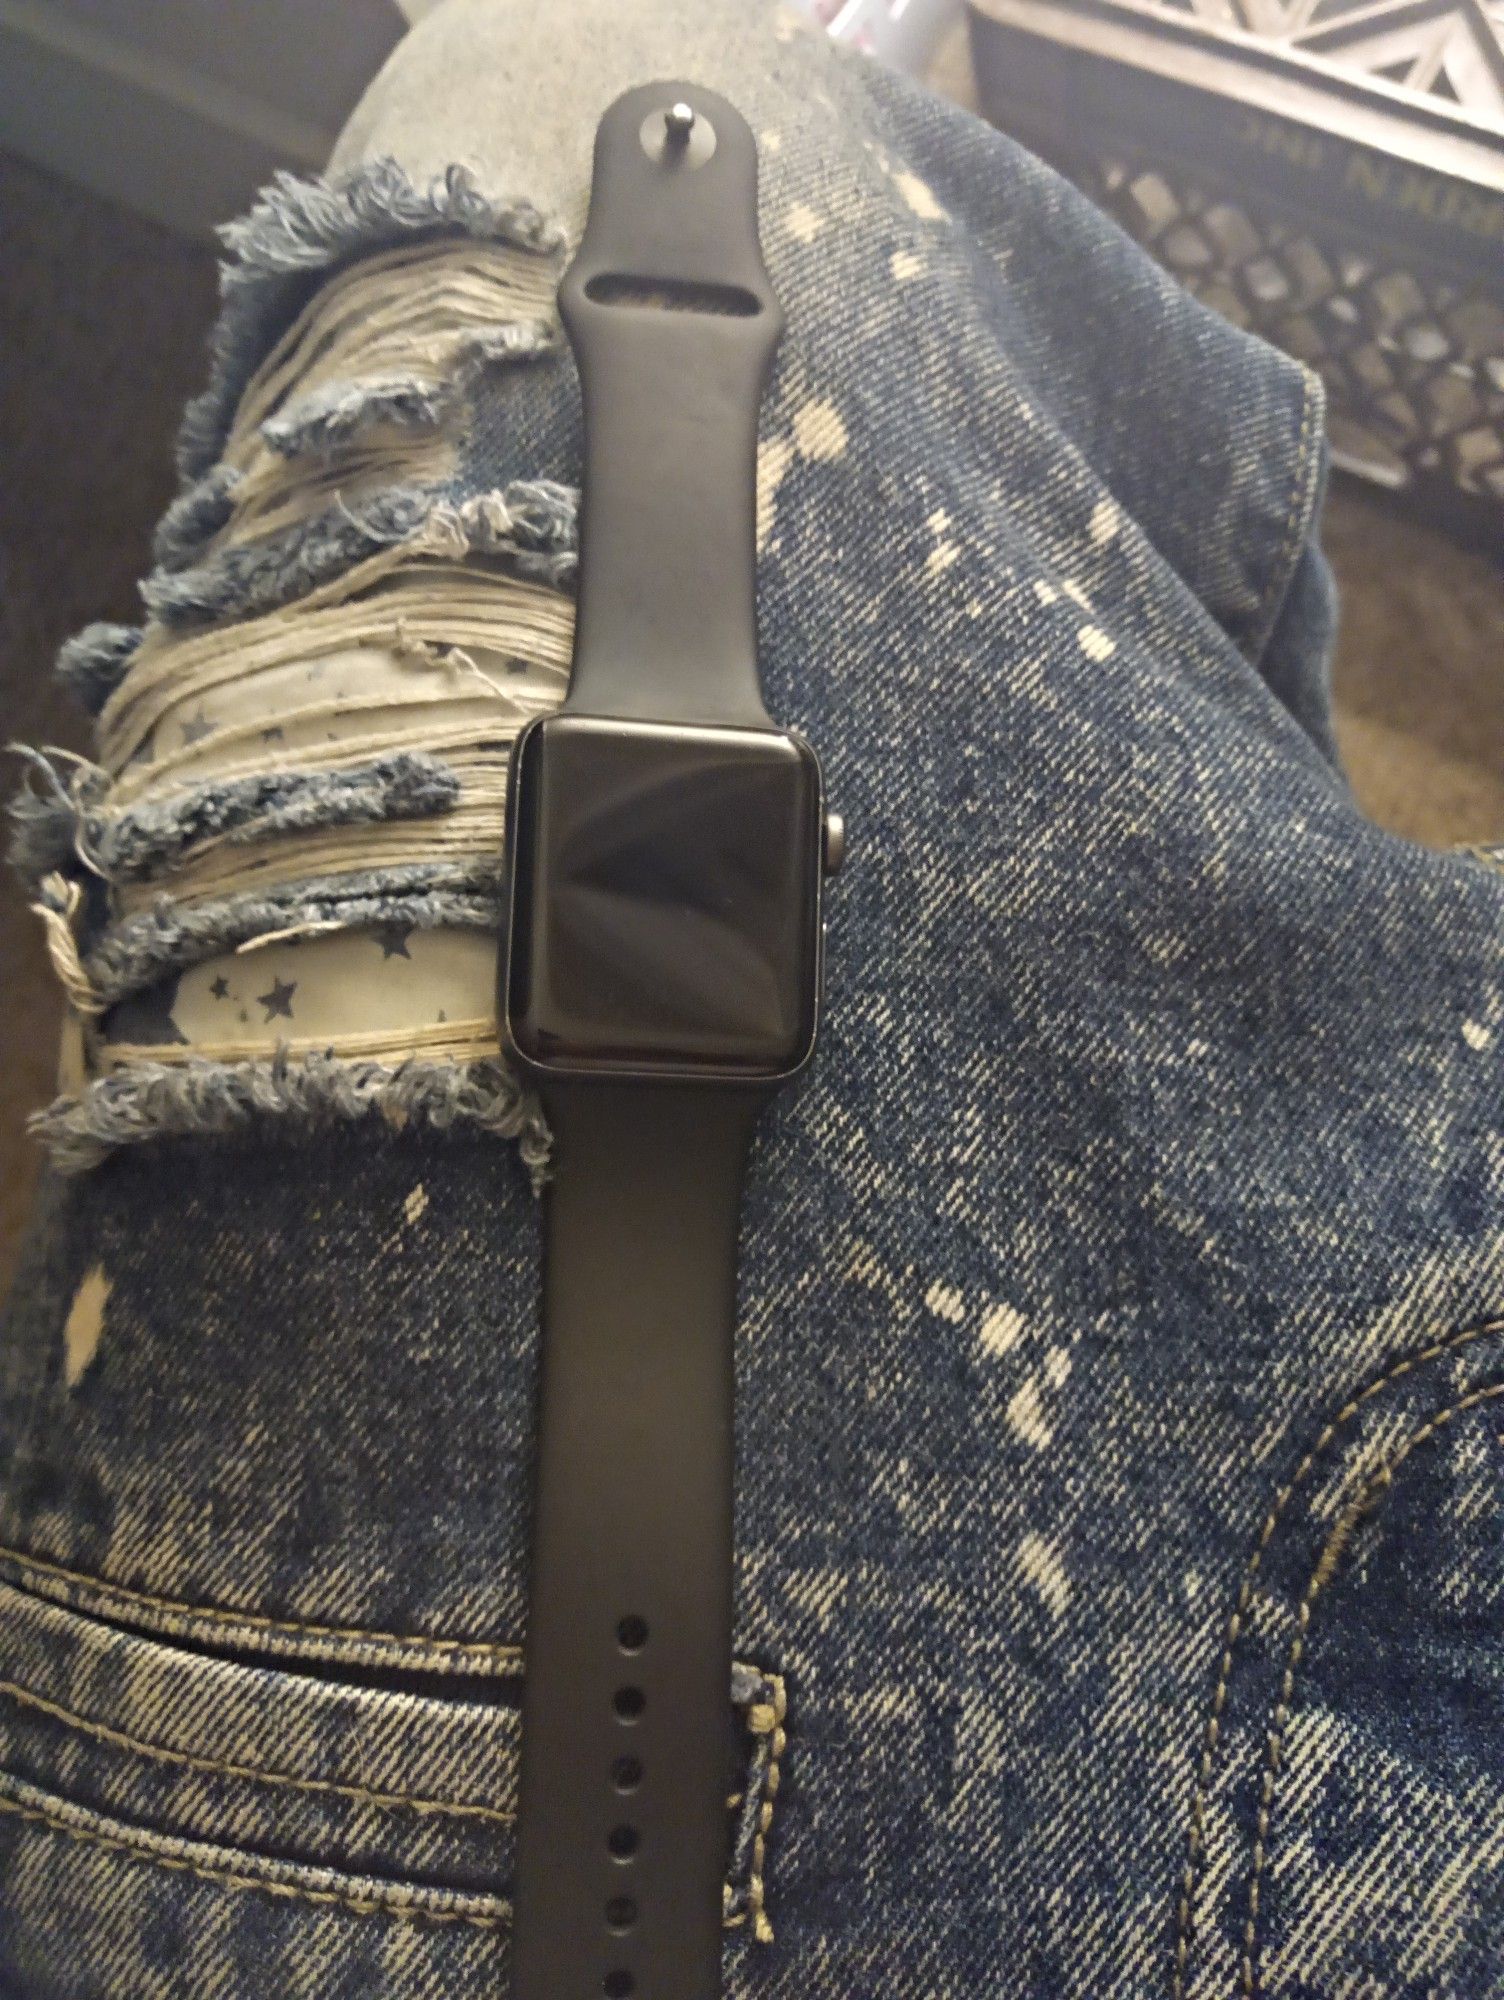 Series 2 Apple watch 42mm